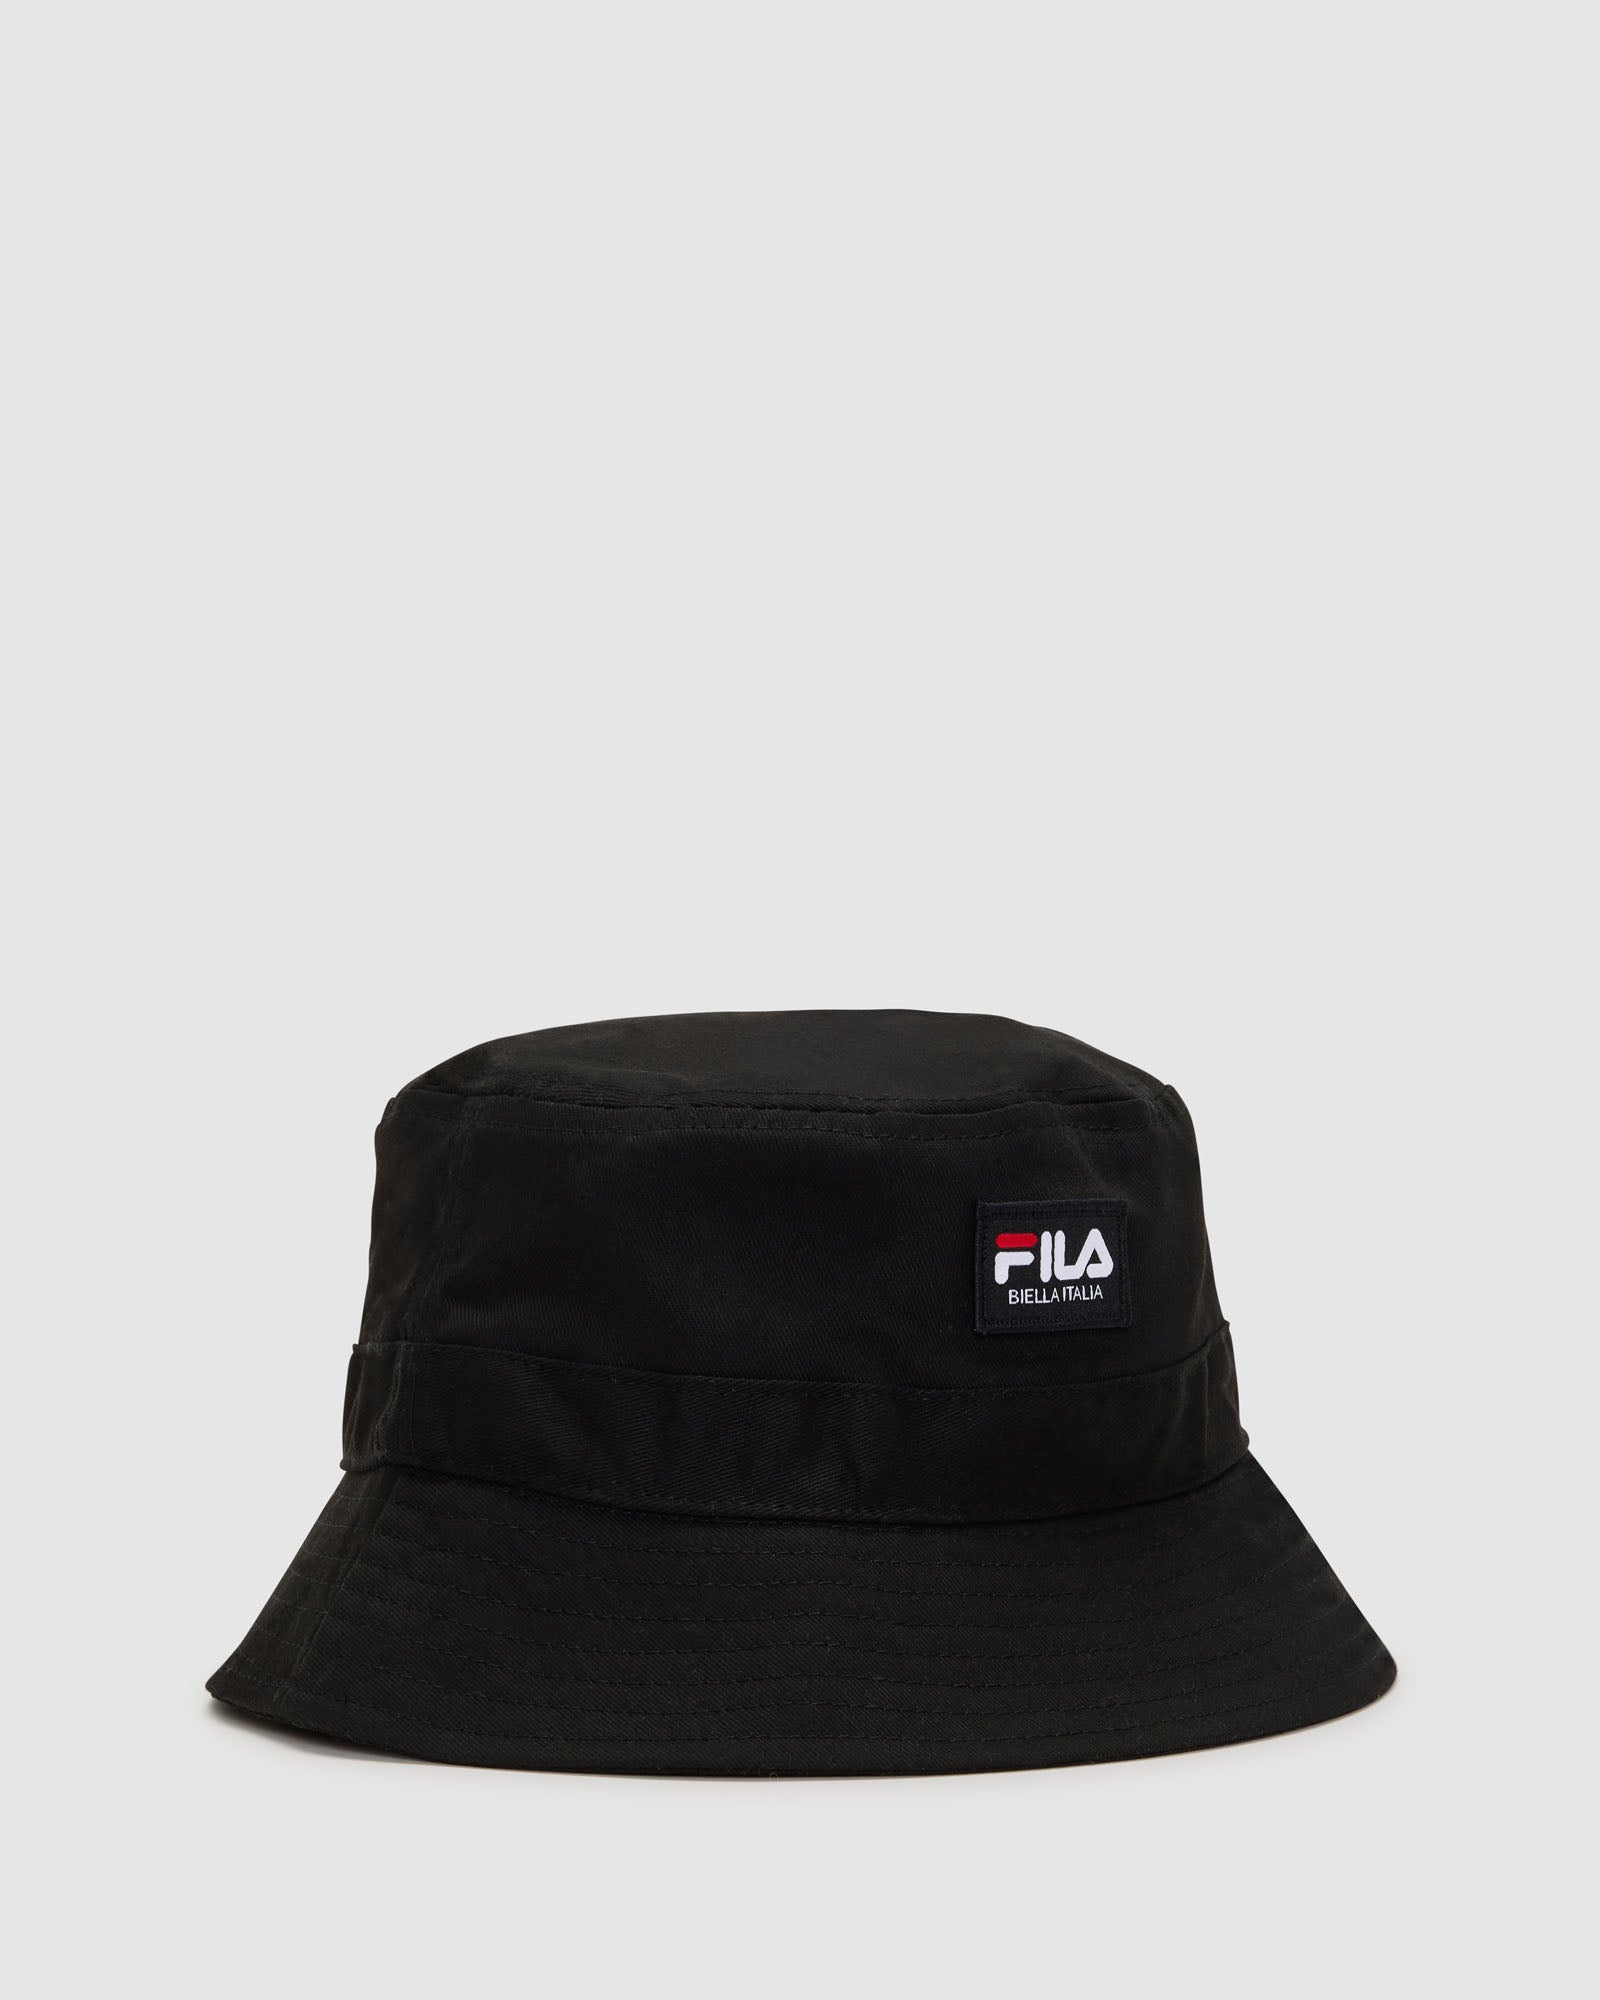 timmerman Tot ziens Gooi FILA Distintivo Bucket Hat | FILA Australia